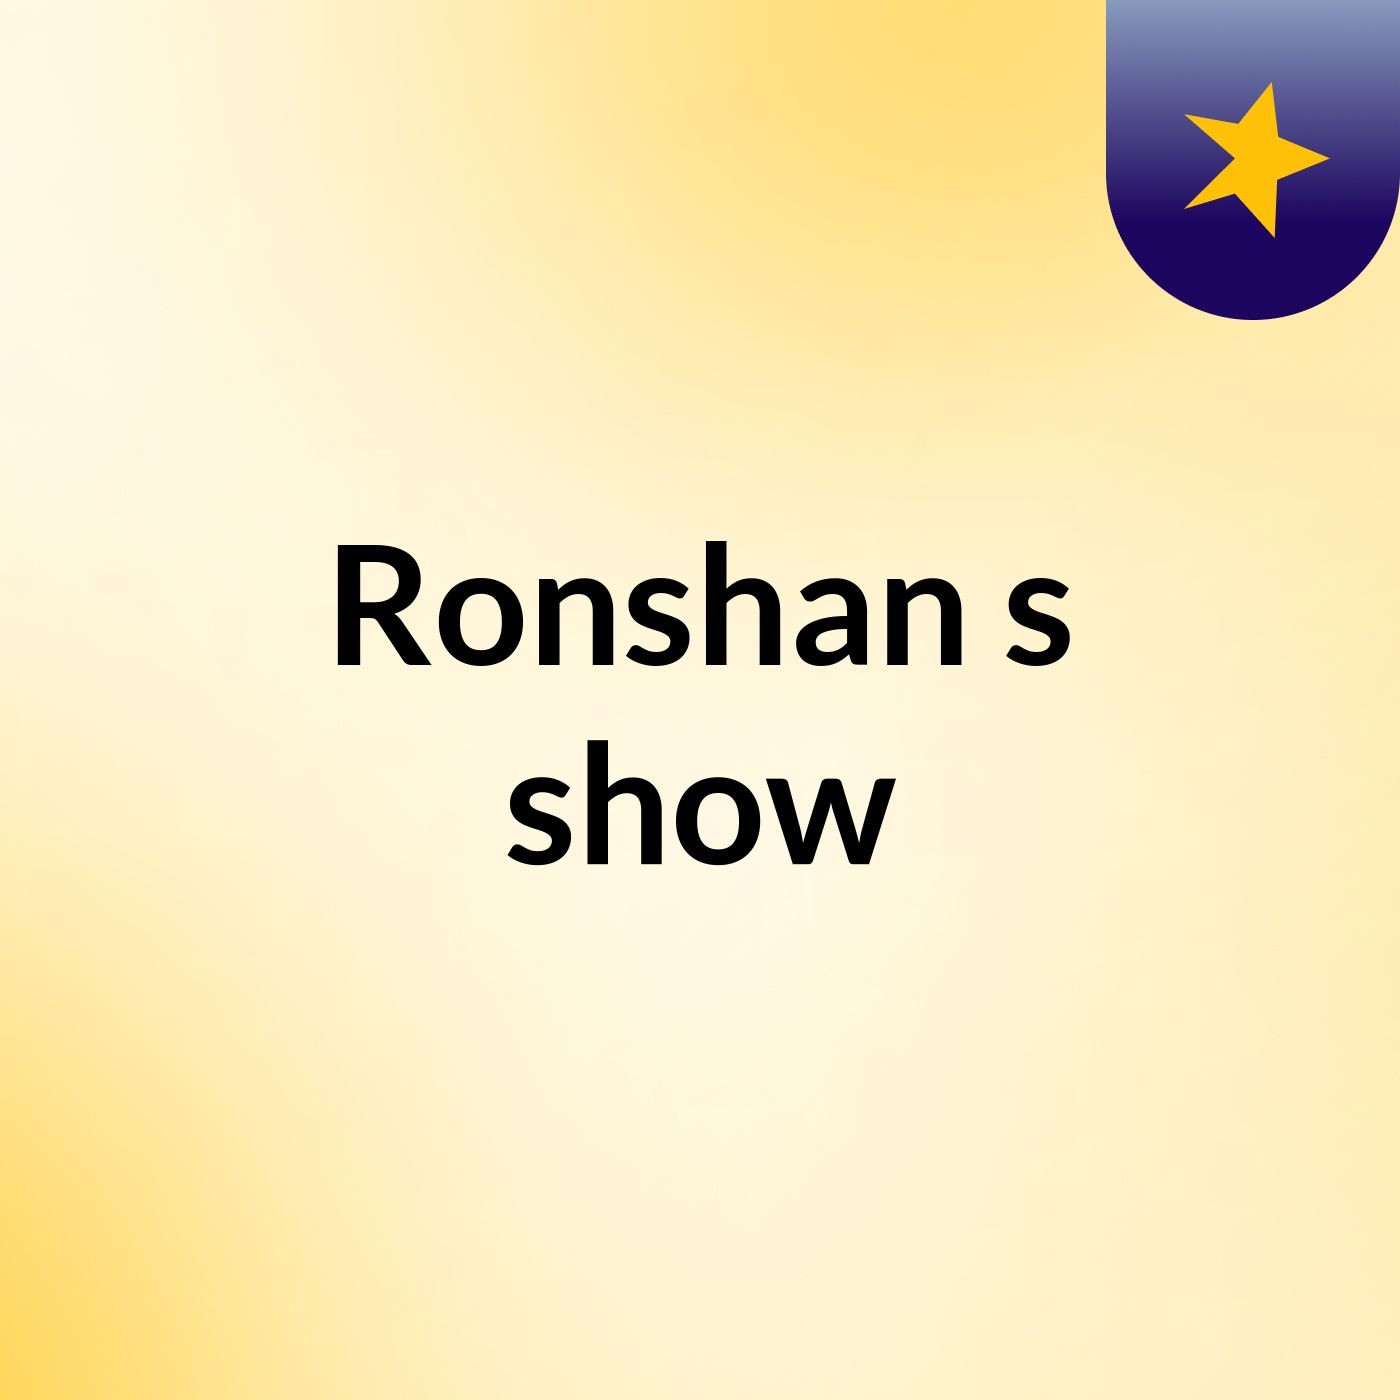 Ronshan's show